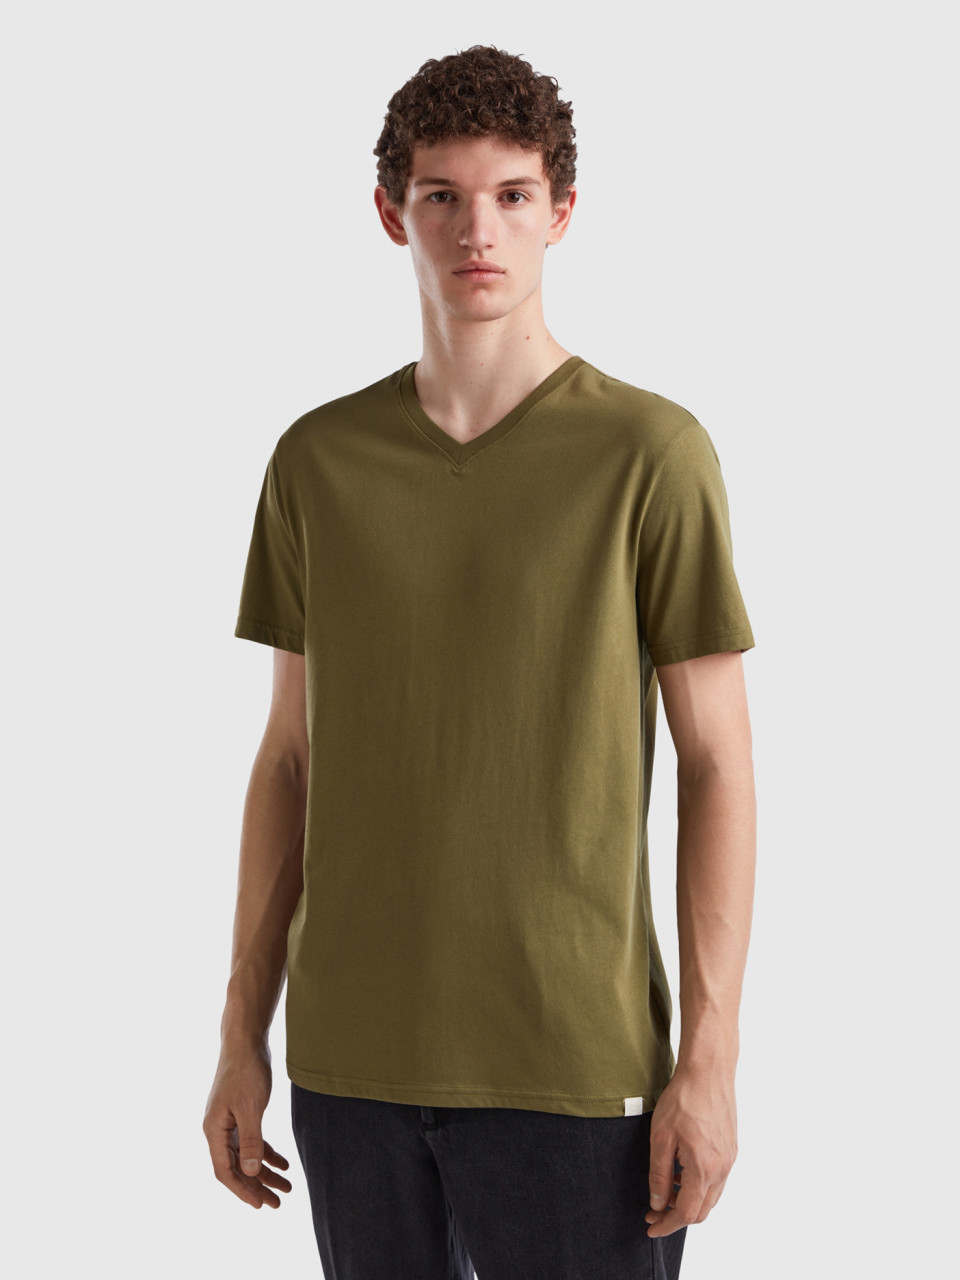 Benetton, T-shirt In Long Fiber Cotton, Military Green, Men